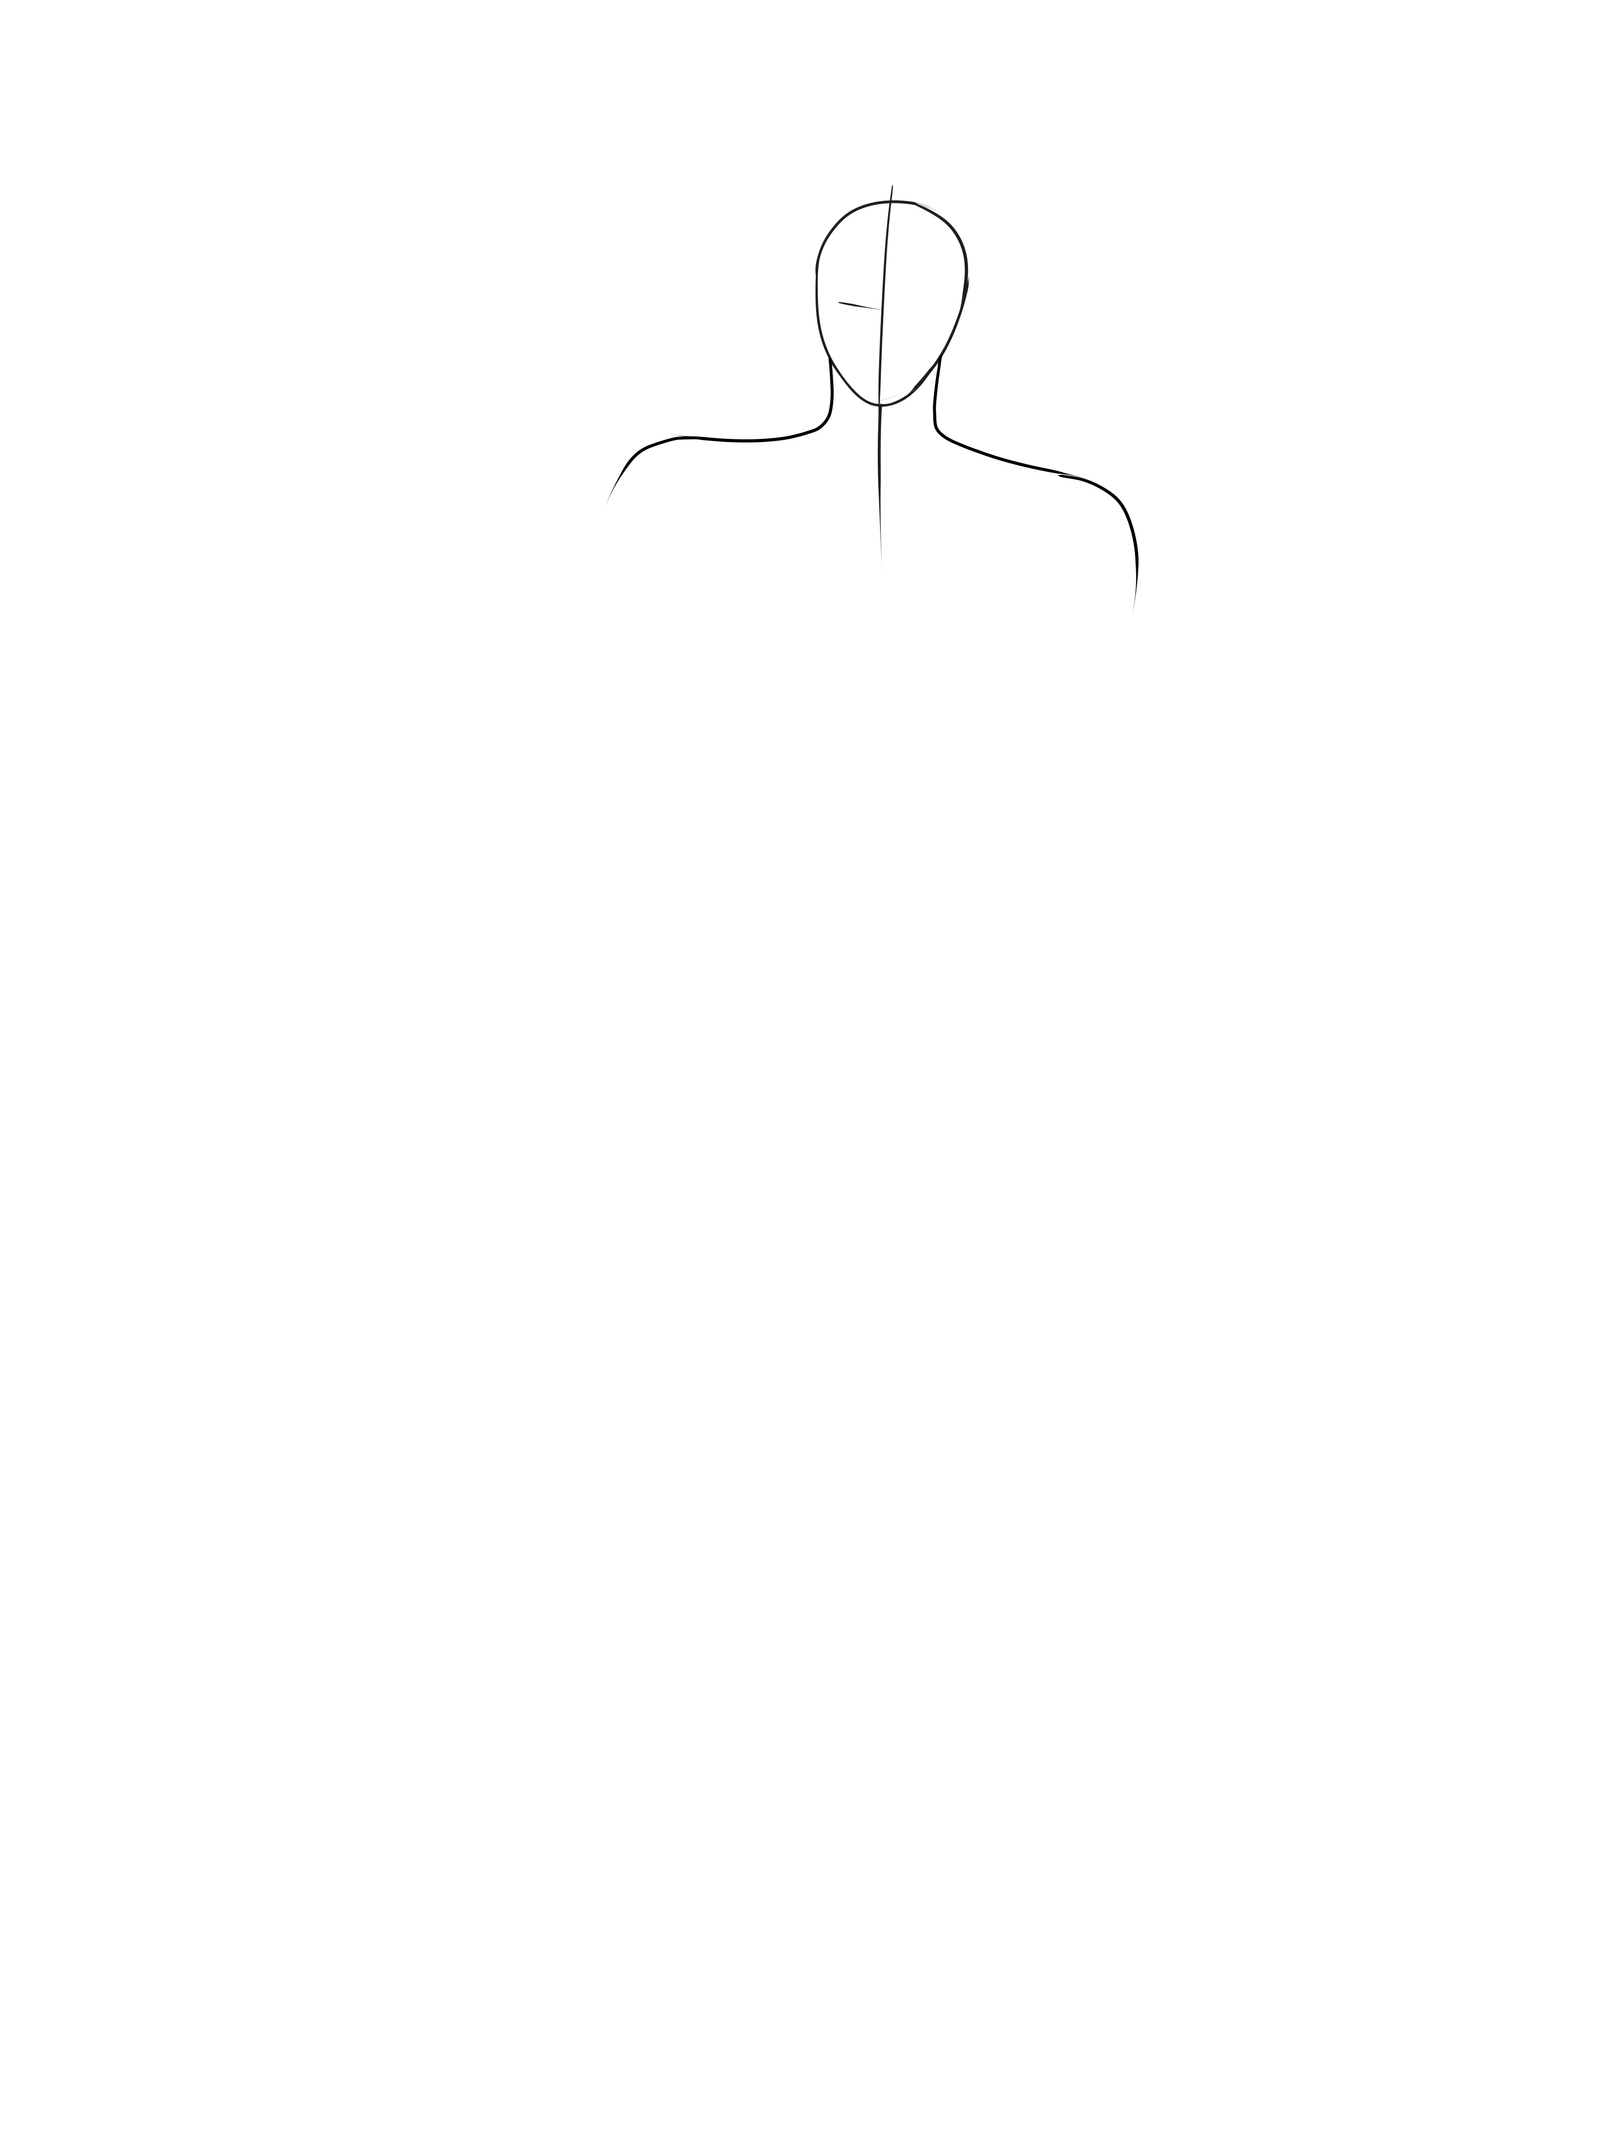 STEP 2) Draw the shoulder